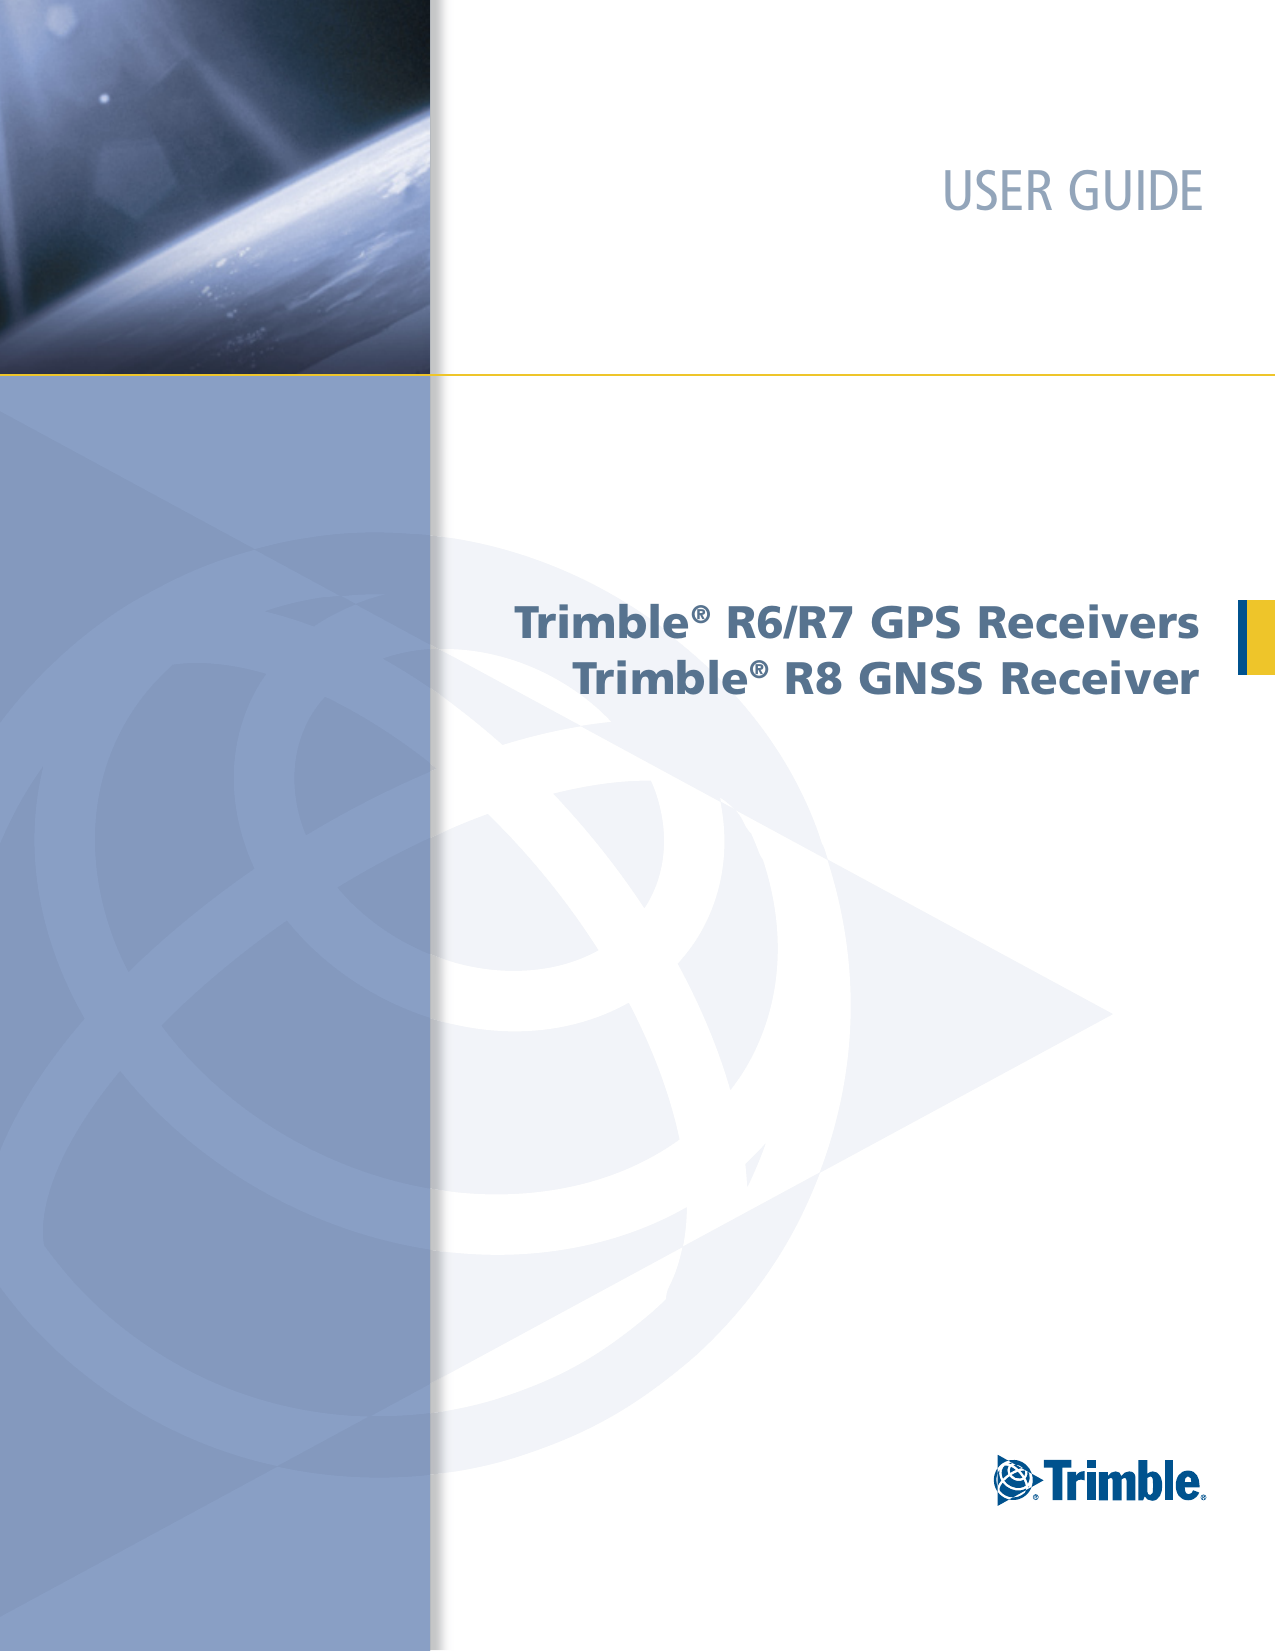 USER GUIDETrimble® R6/R7 GPS ReceiversTrimble® R8 GNSS Receiver